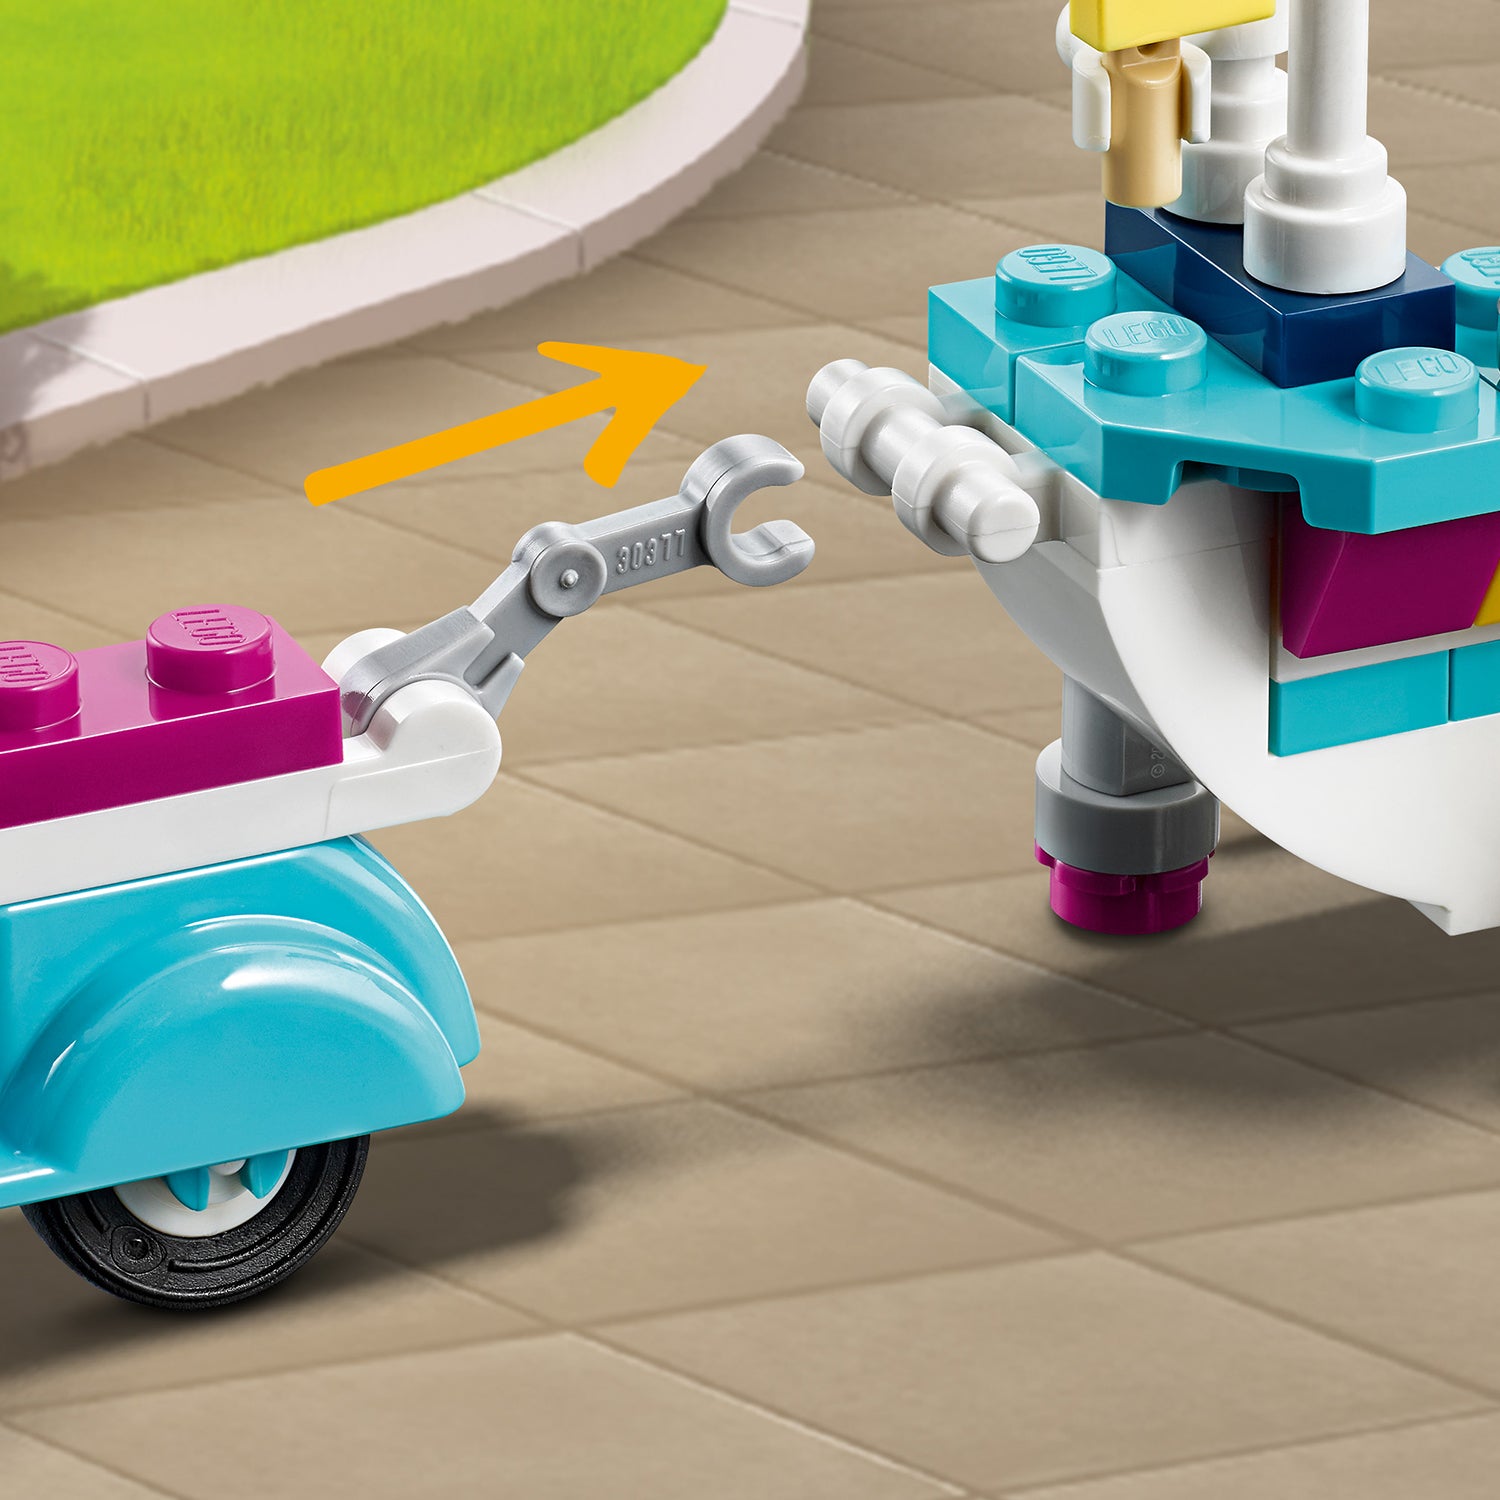 LEGO® Friends Ice Cream Cart Set 41389 Default Title